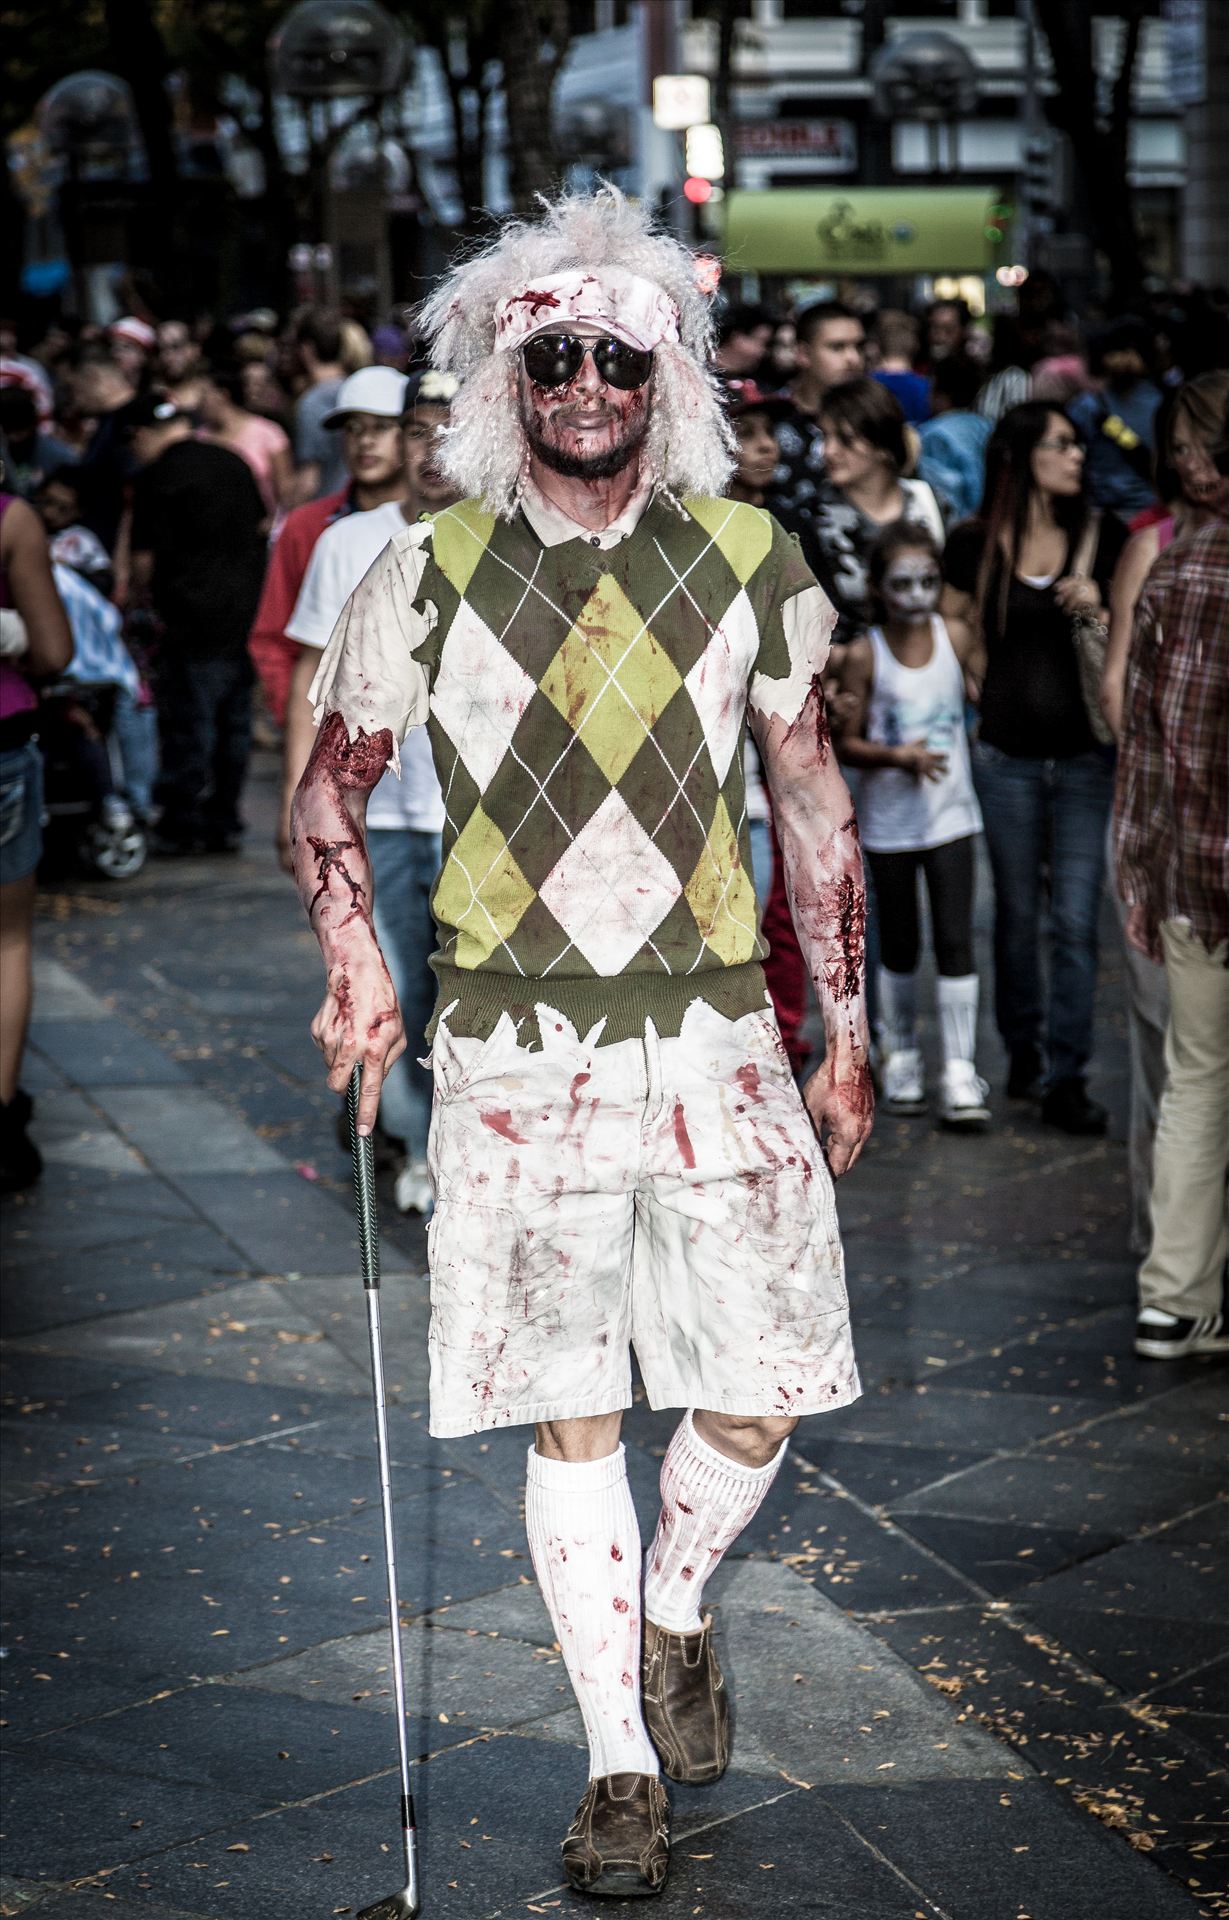 Denver Zombie Crawl 2015 22  by Scott Smith Photos